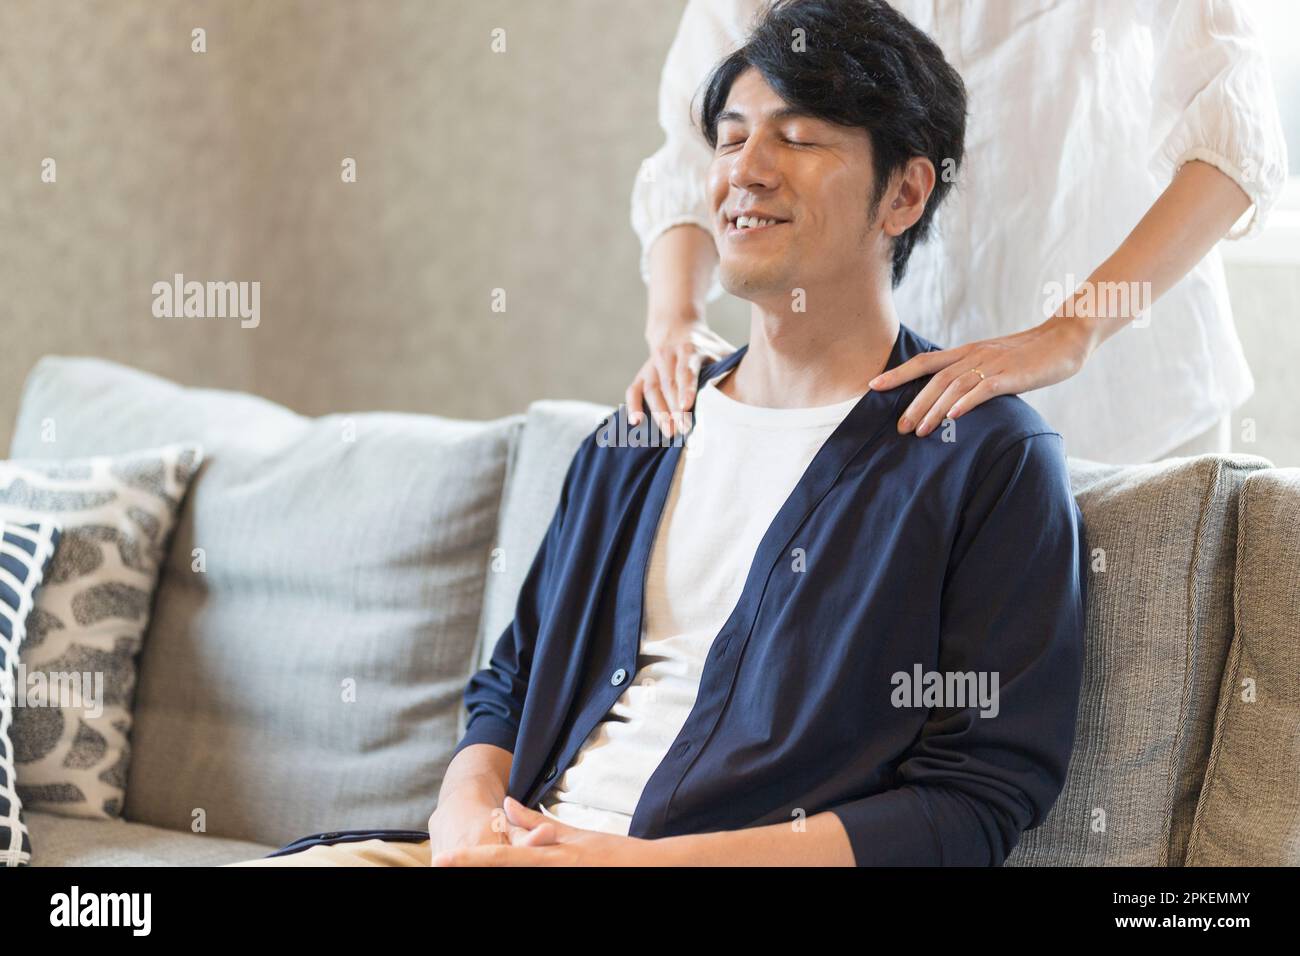 Wife rubbing husband's shoulder Stock Photo - Alamy